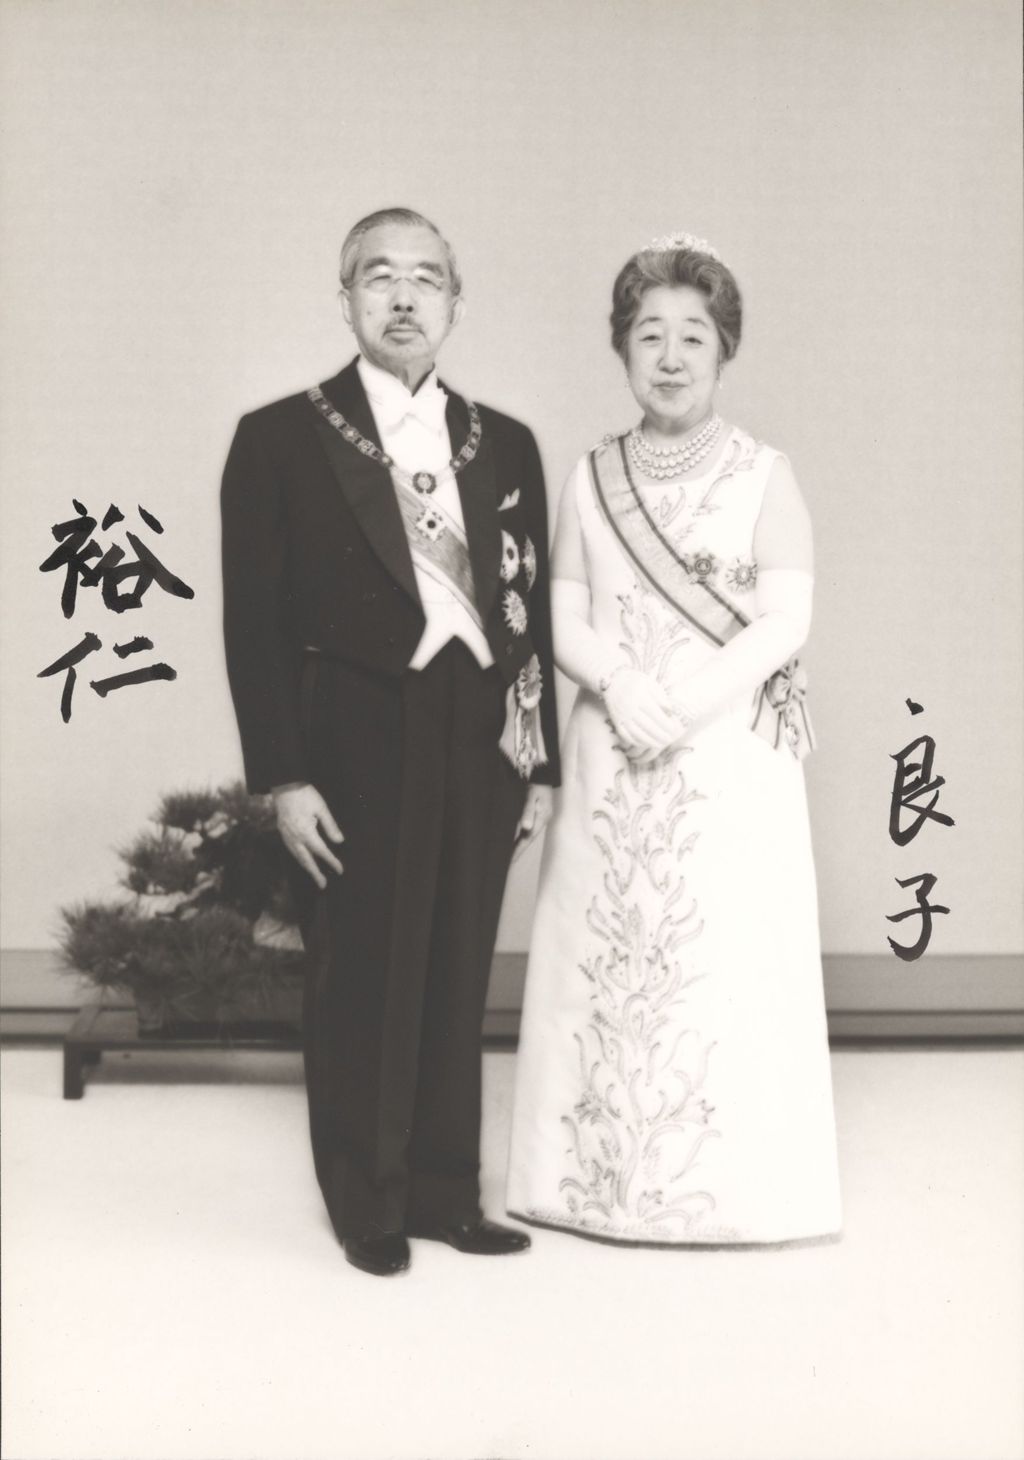 Emperor Hirohito of Japan and Empress Kōjun